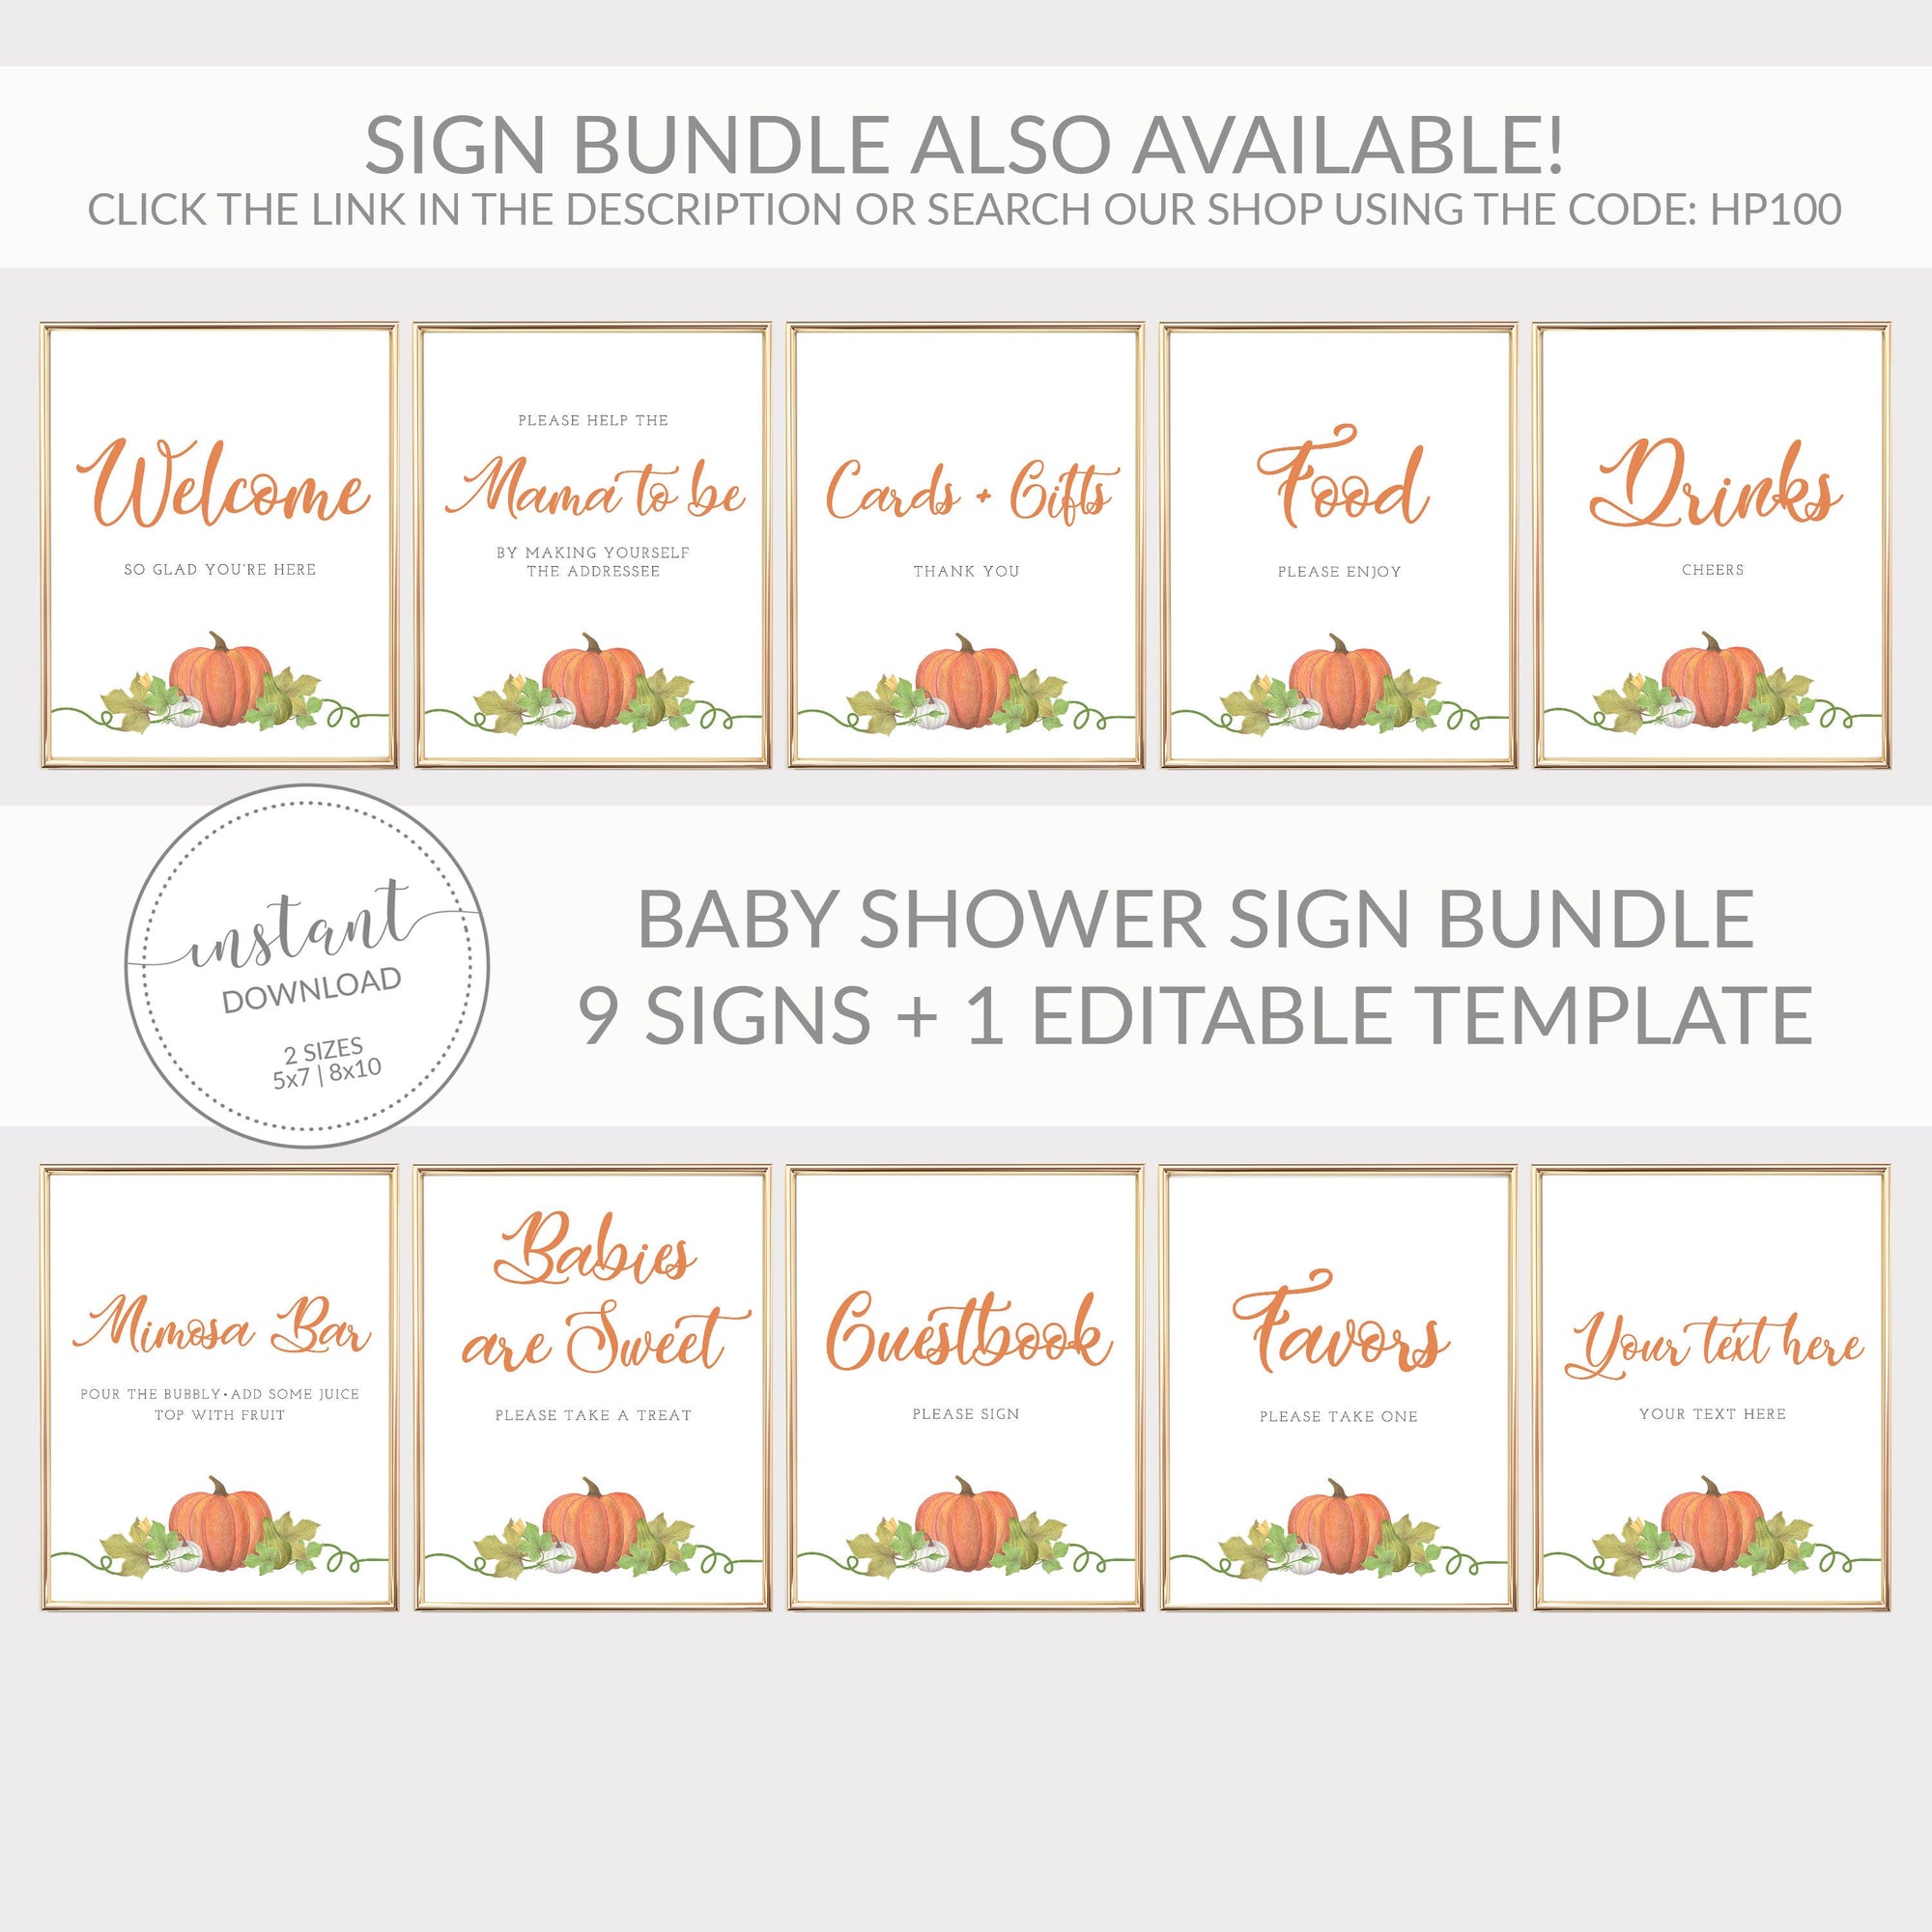 Little Pumpkin Baby Shower Decorations, Little Pumpkin Baby Shower Cards and Gifts Sign Printable, INSTANT DOWNLOAD - HP100 - @PlumPolkaDot 